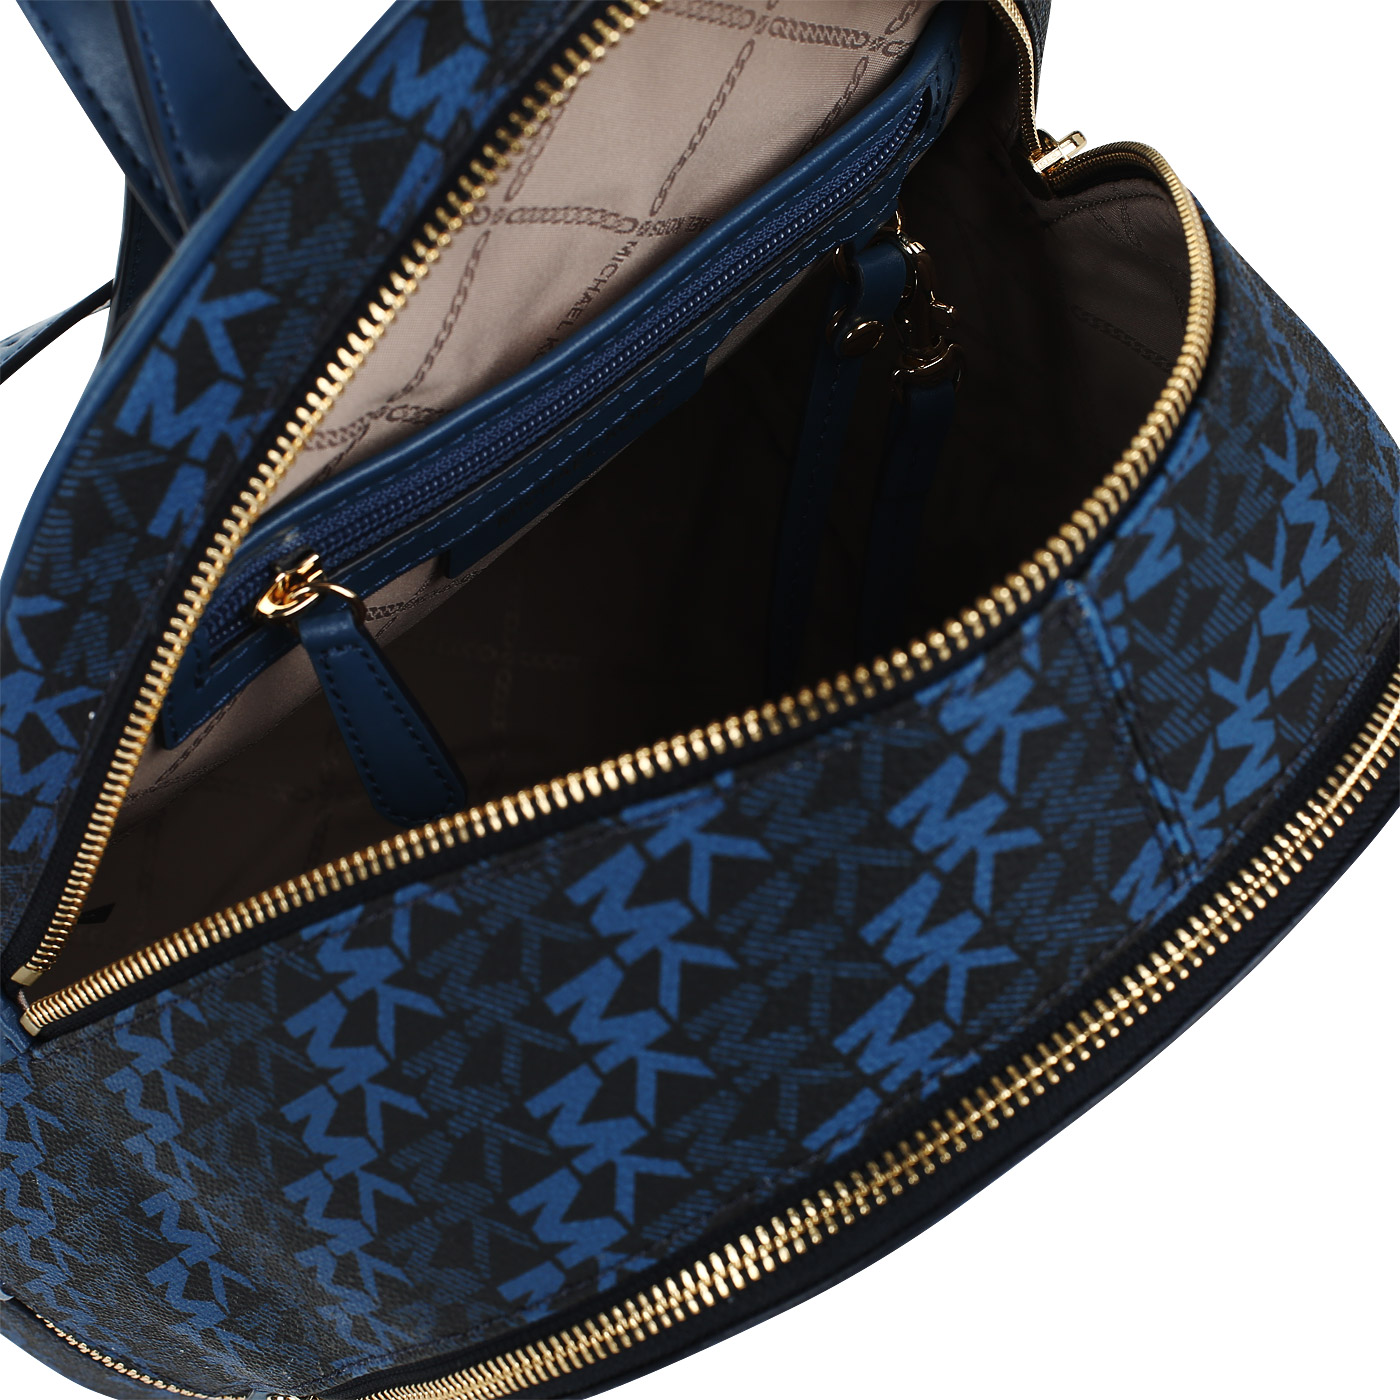 Женский рюкзак с двумя отделами Michael Kors Rhea Zip